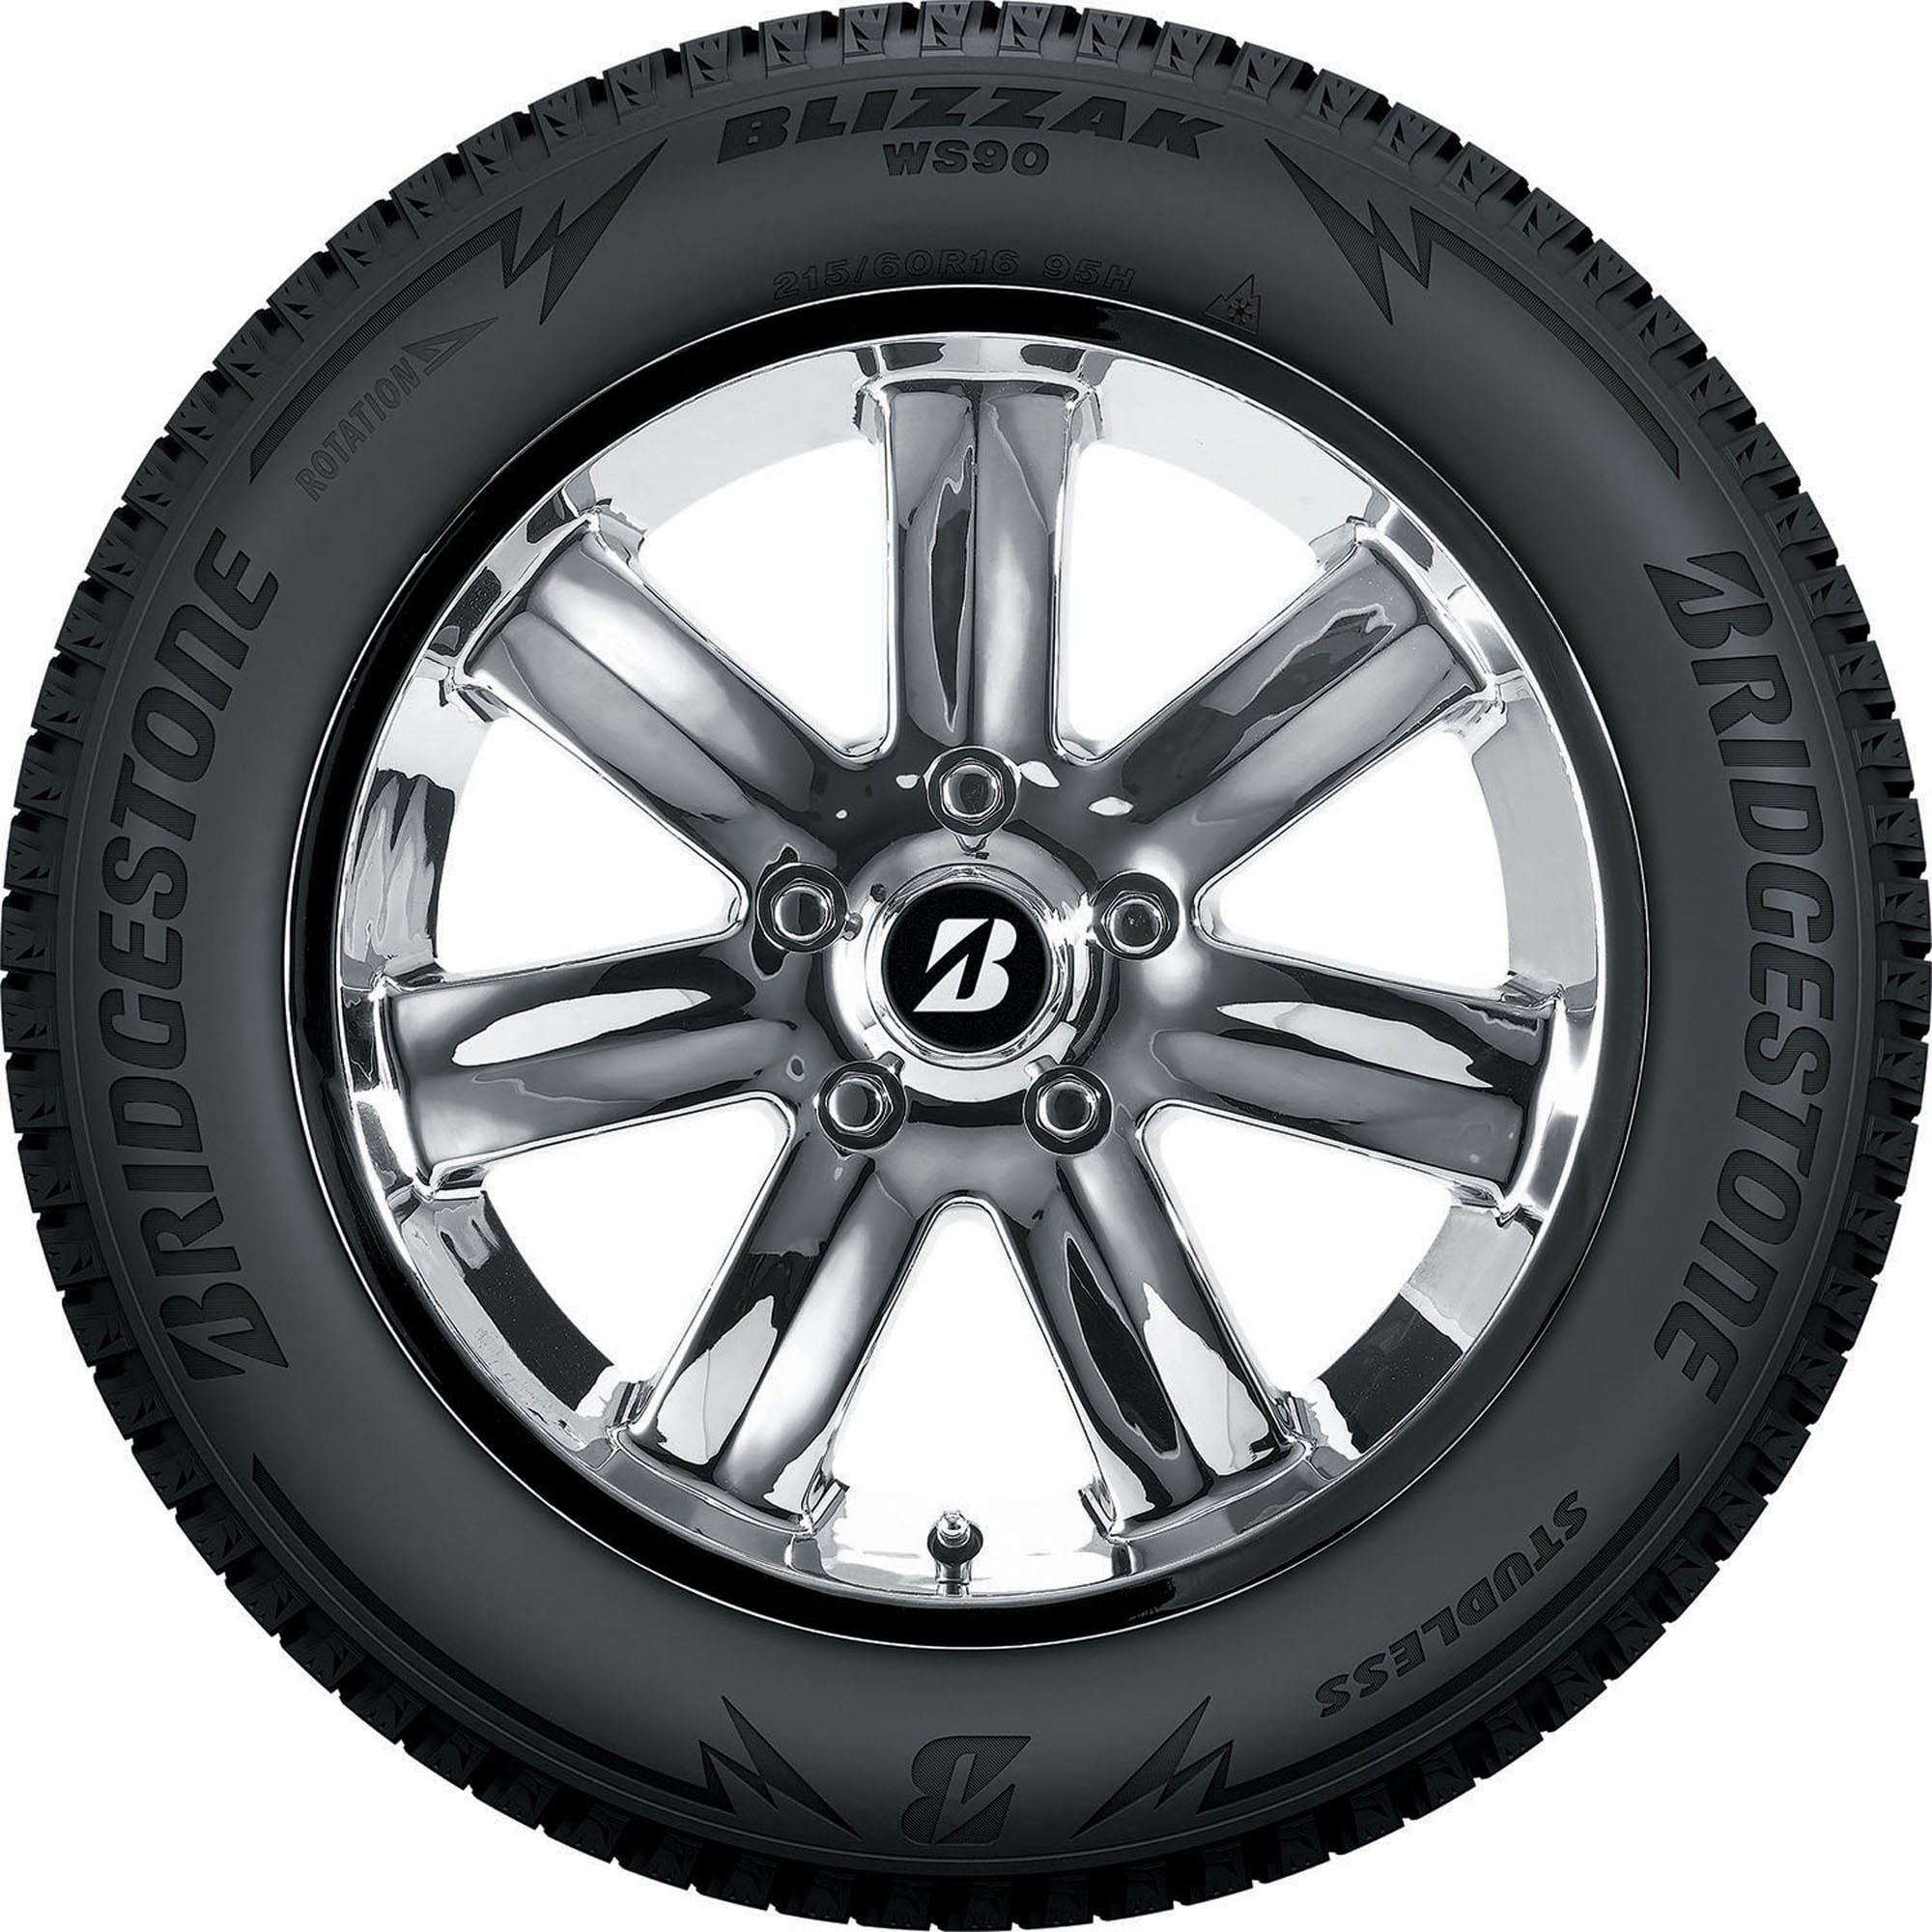 Bridgestone Blizzak WS90 Winter 215/65R16 98H Passenger Tire